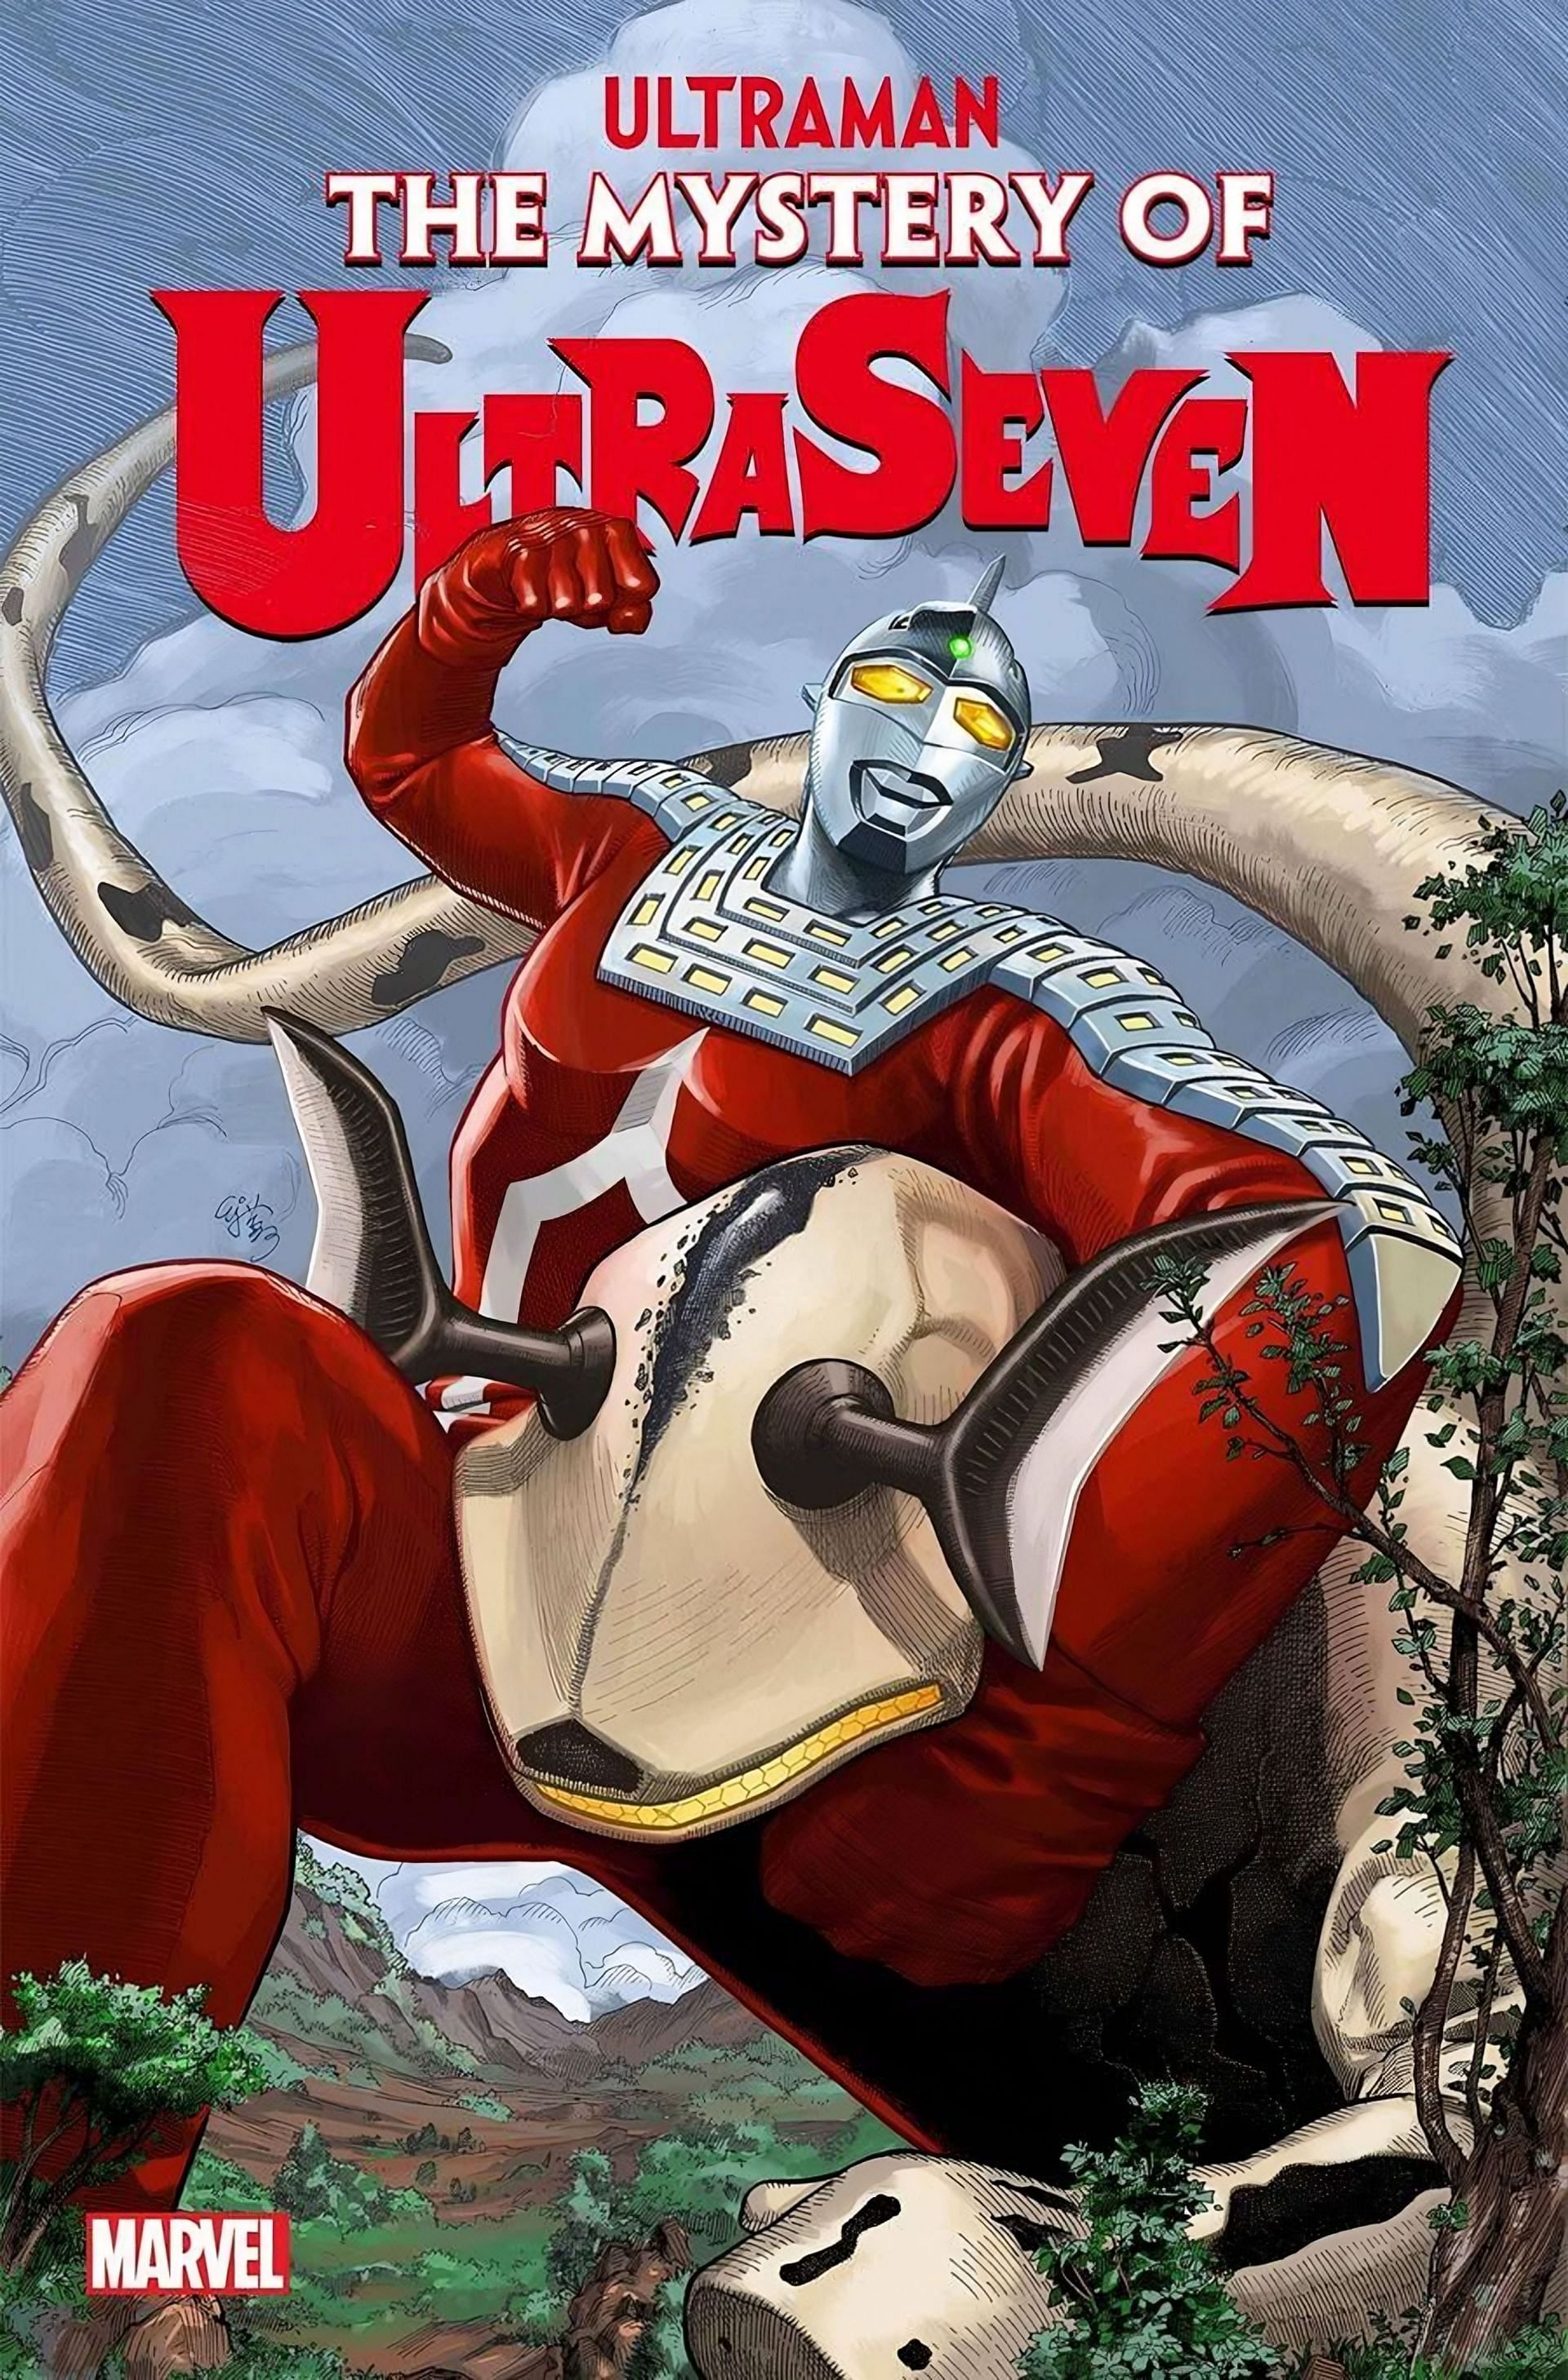 Comic cover (Image via Marvel Comics)